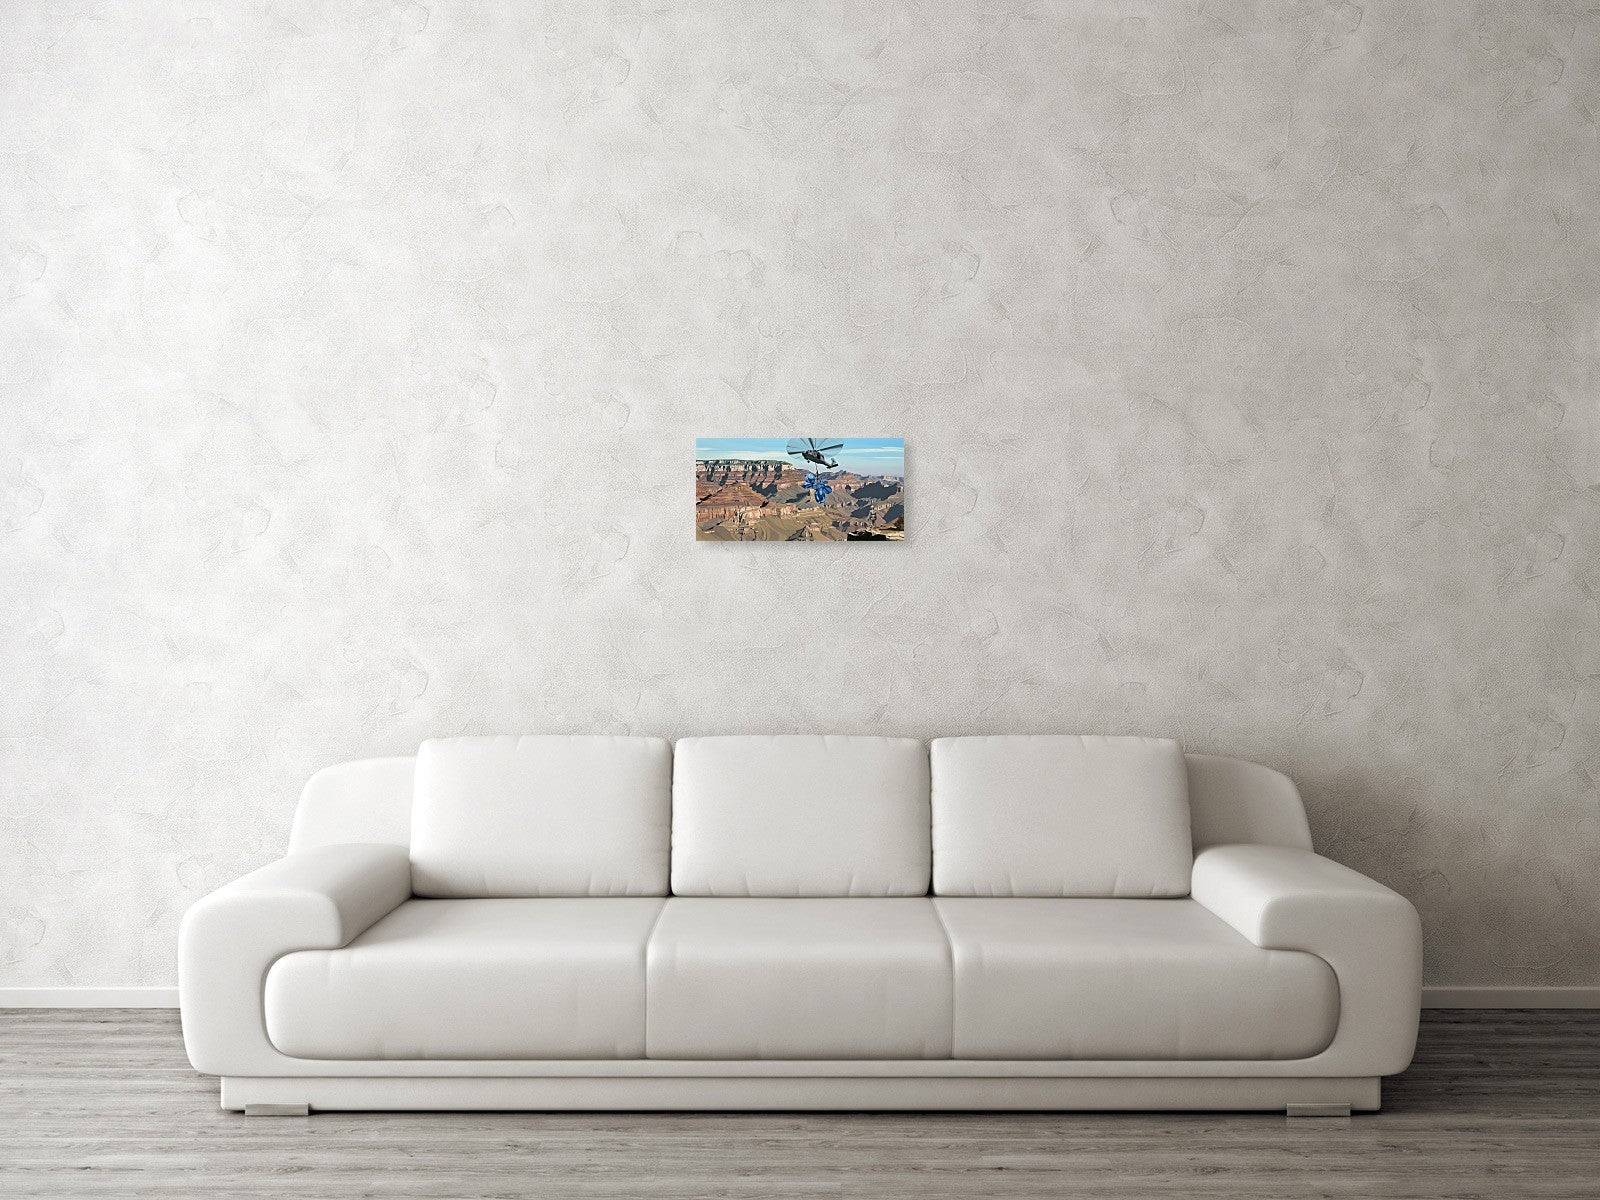 Grand Canyon Art Print Canvas And Poster, Warm Home Decor Wall Art Visual Art 1617268379525.jpg